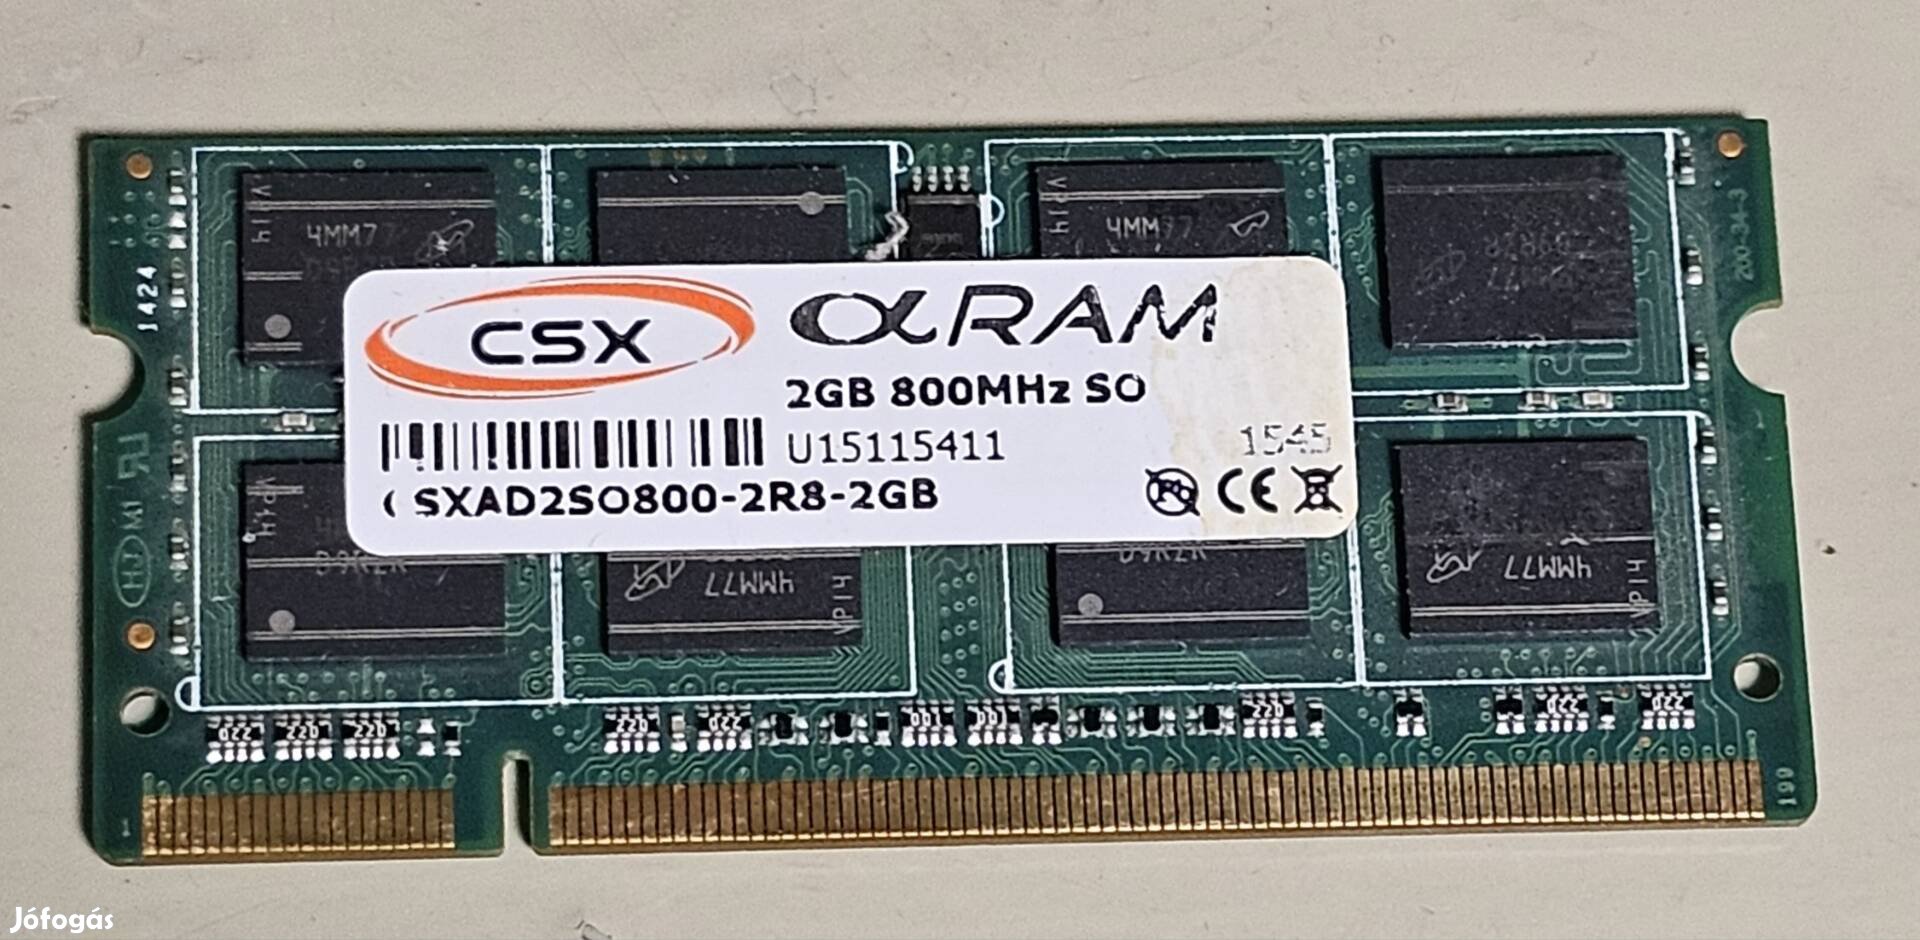 Csx laptop ram  2GB/800MHZ